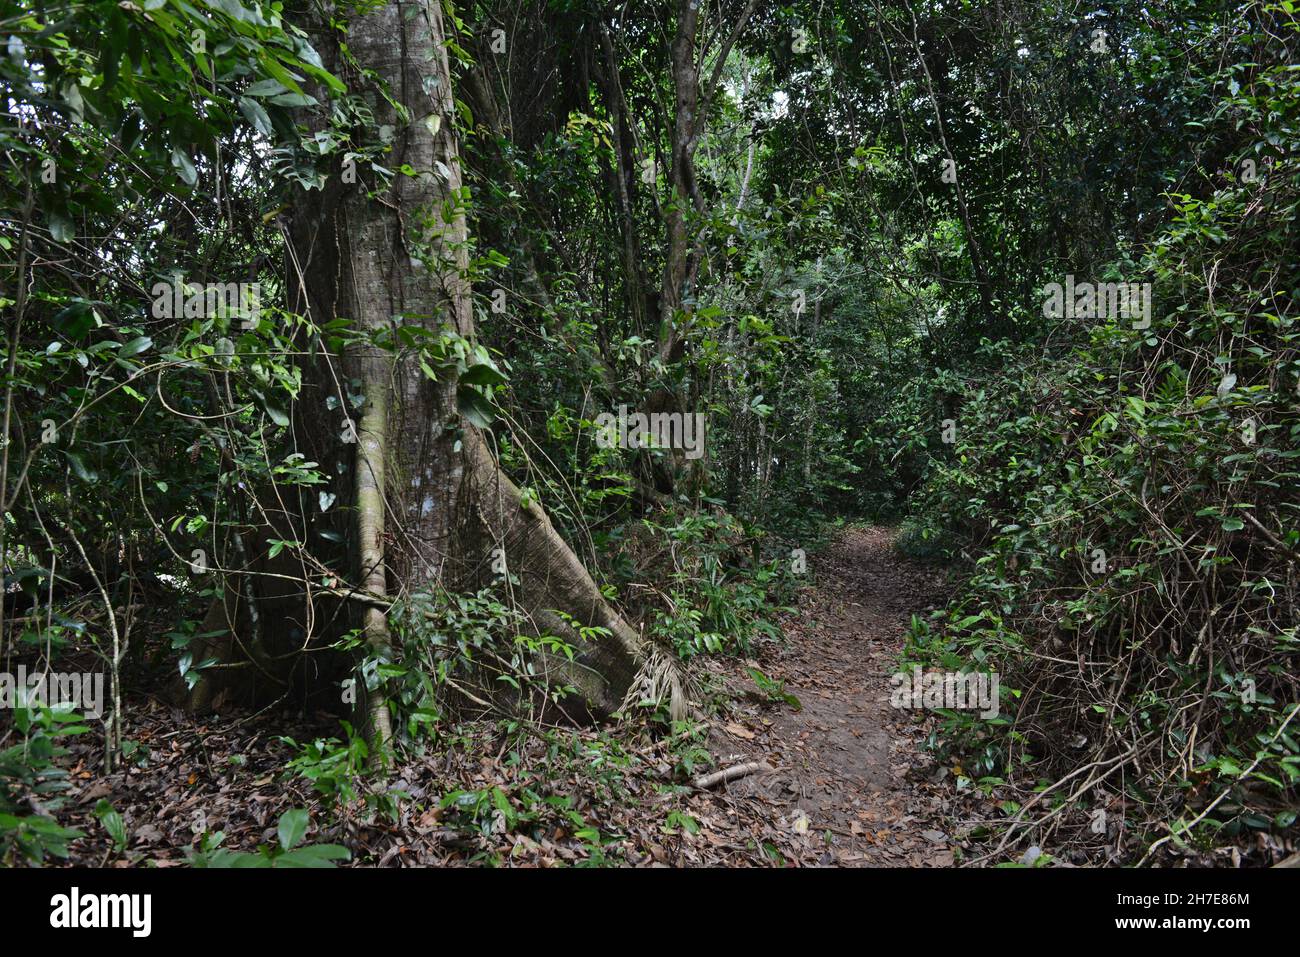 Samauma-Baum (Ceiba pentandra) und ein Pfad im Amazonas-Regenwald. Barcarena, Pará Staat Brasilien Stockfoto